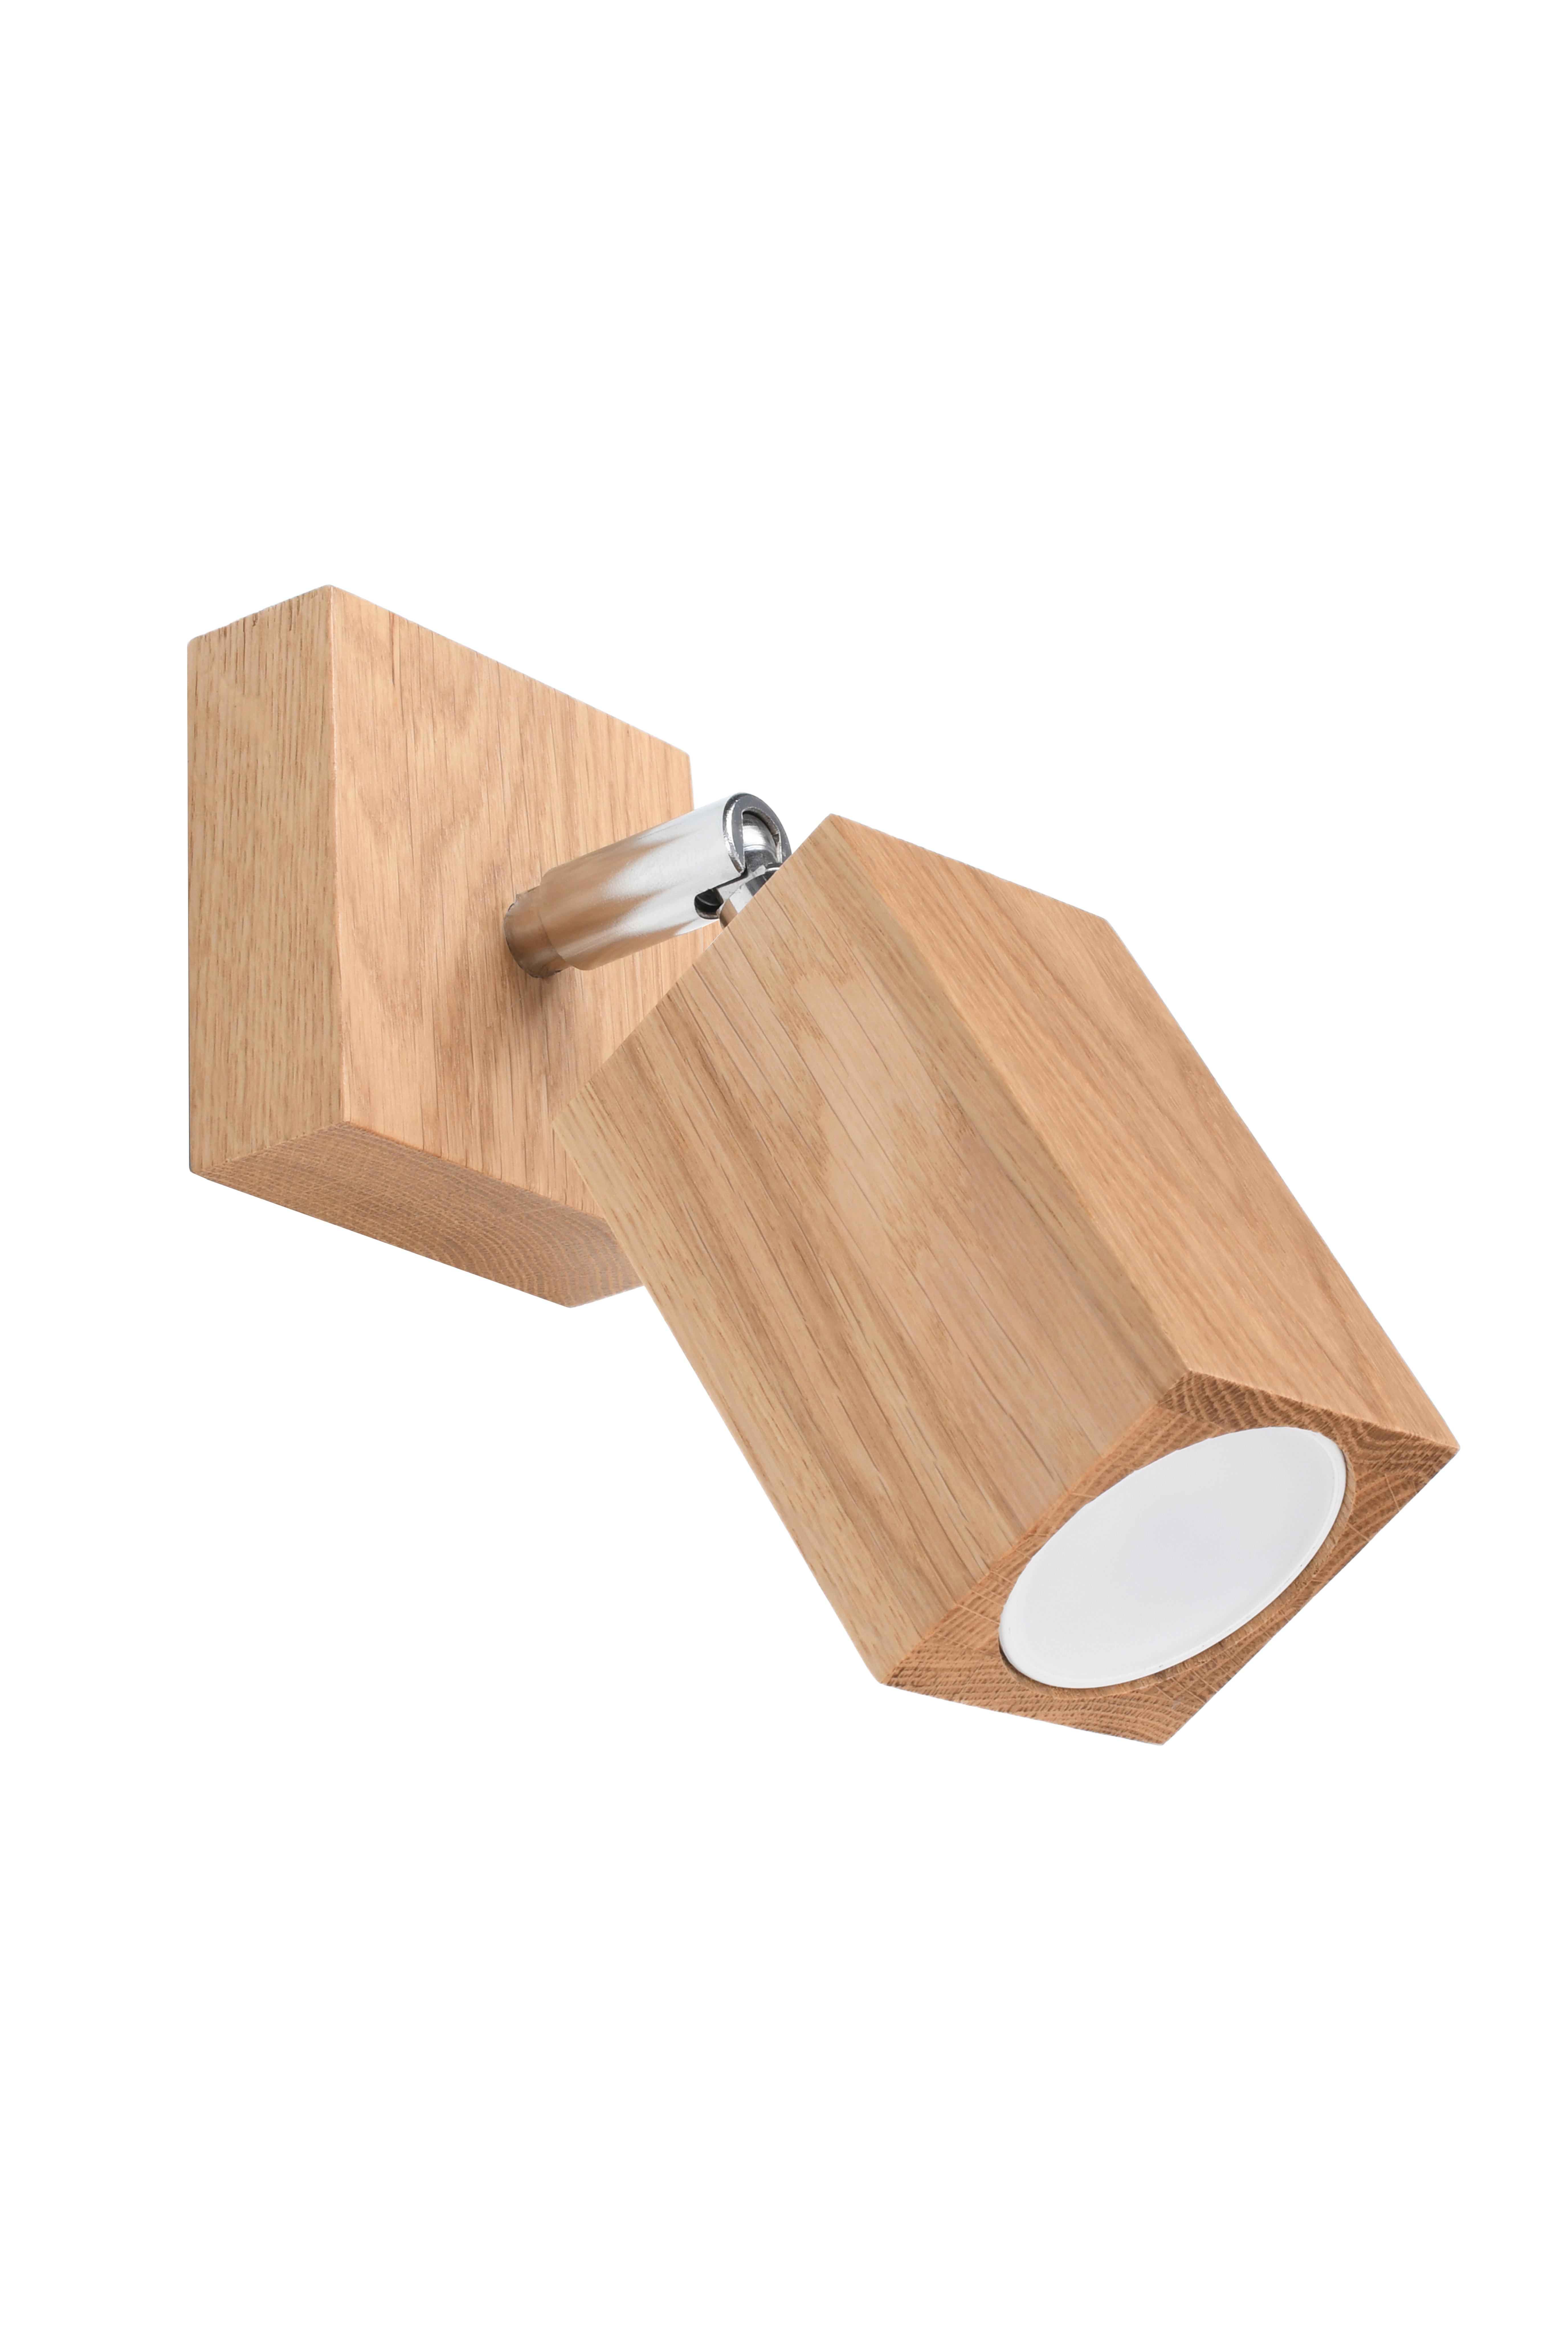 Holz Wandstrahler LED Spotlight Eiche inkl. LED warmweiß 7W | LichtED.de -  LED Lampen und Beleuchtung